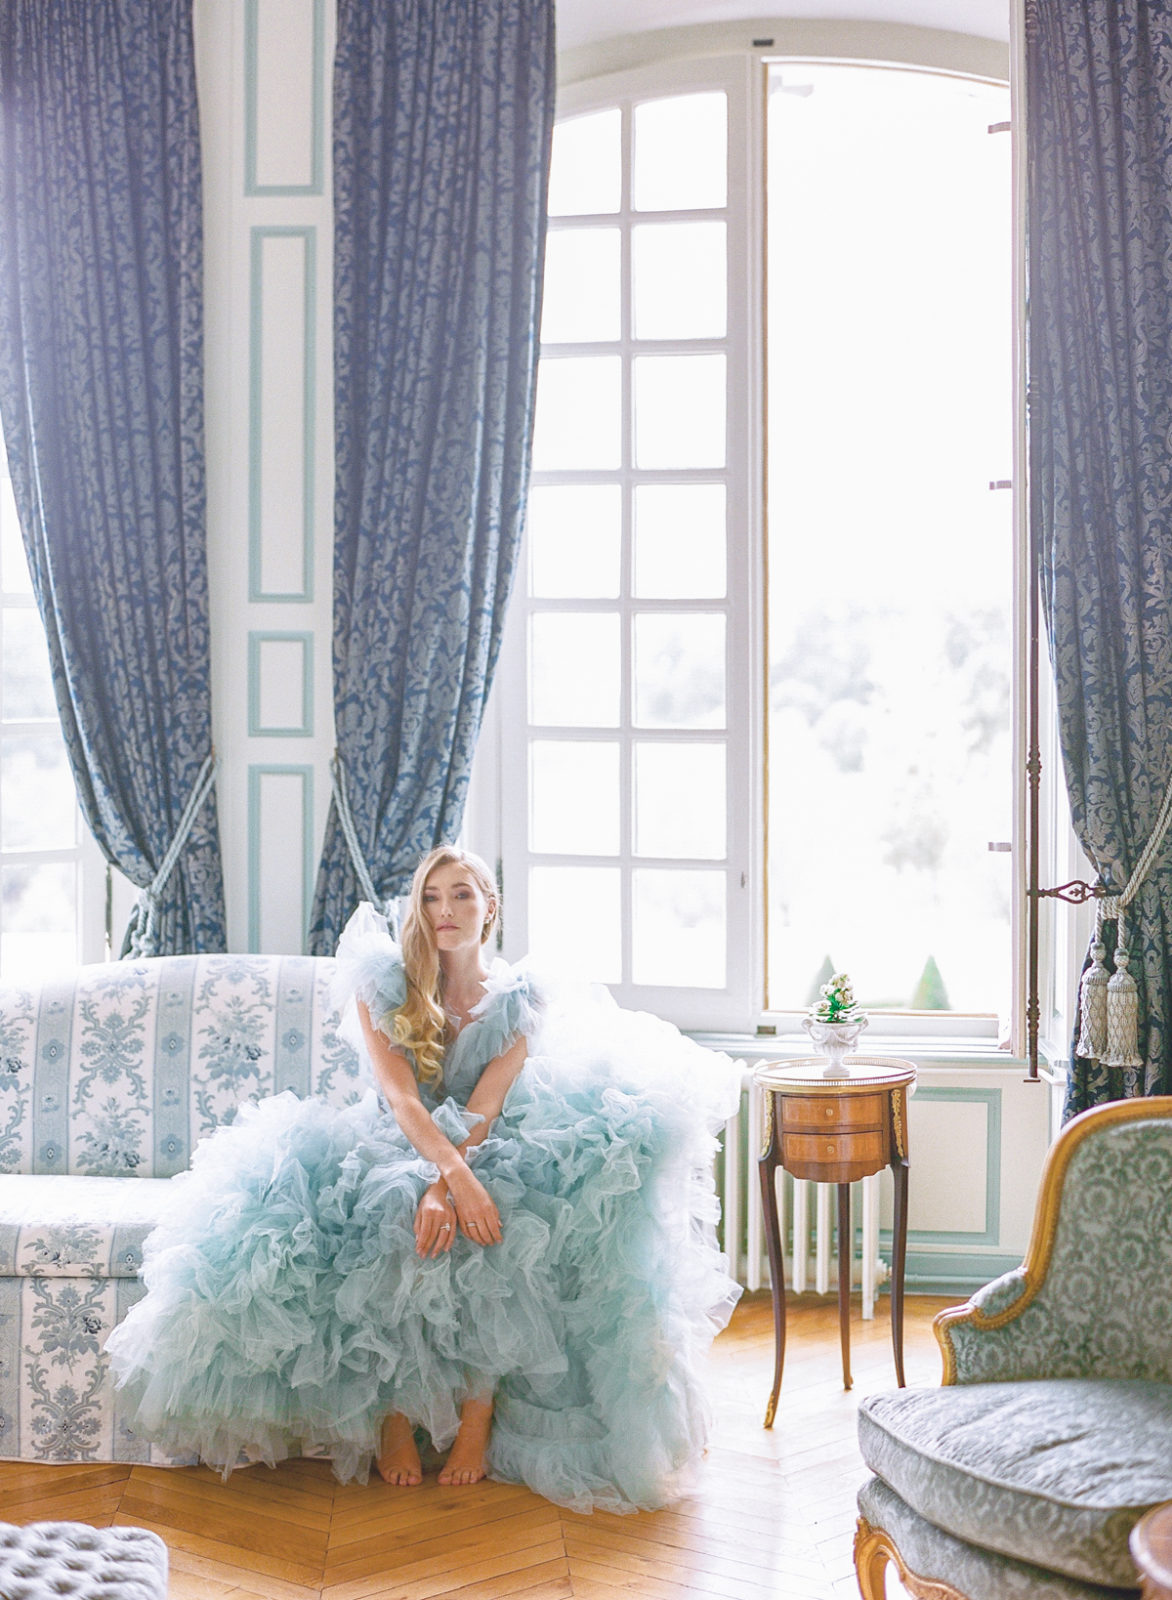 Chateau Grand Luce Wedding Photographer | Molly Carr Photography | France Luxury Destination Wedding | Paris Film Photographer | Rachael Ellen Events